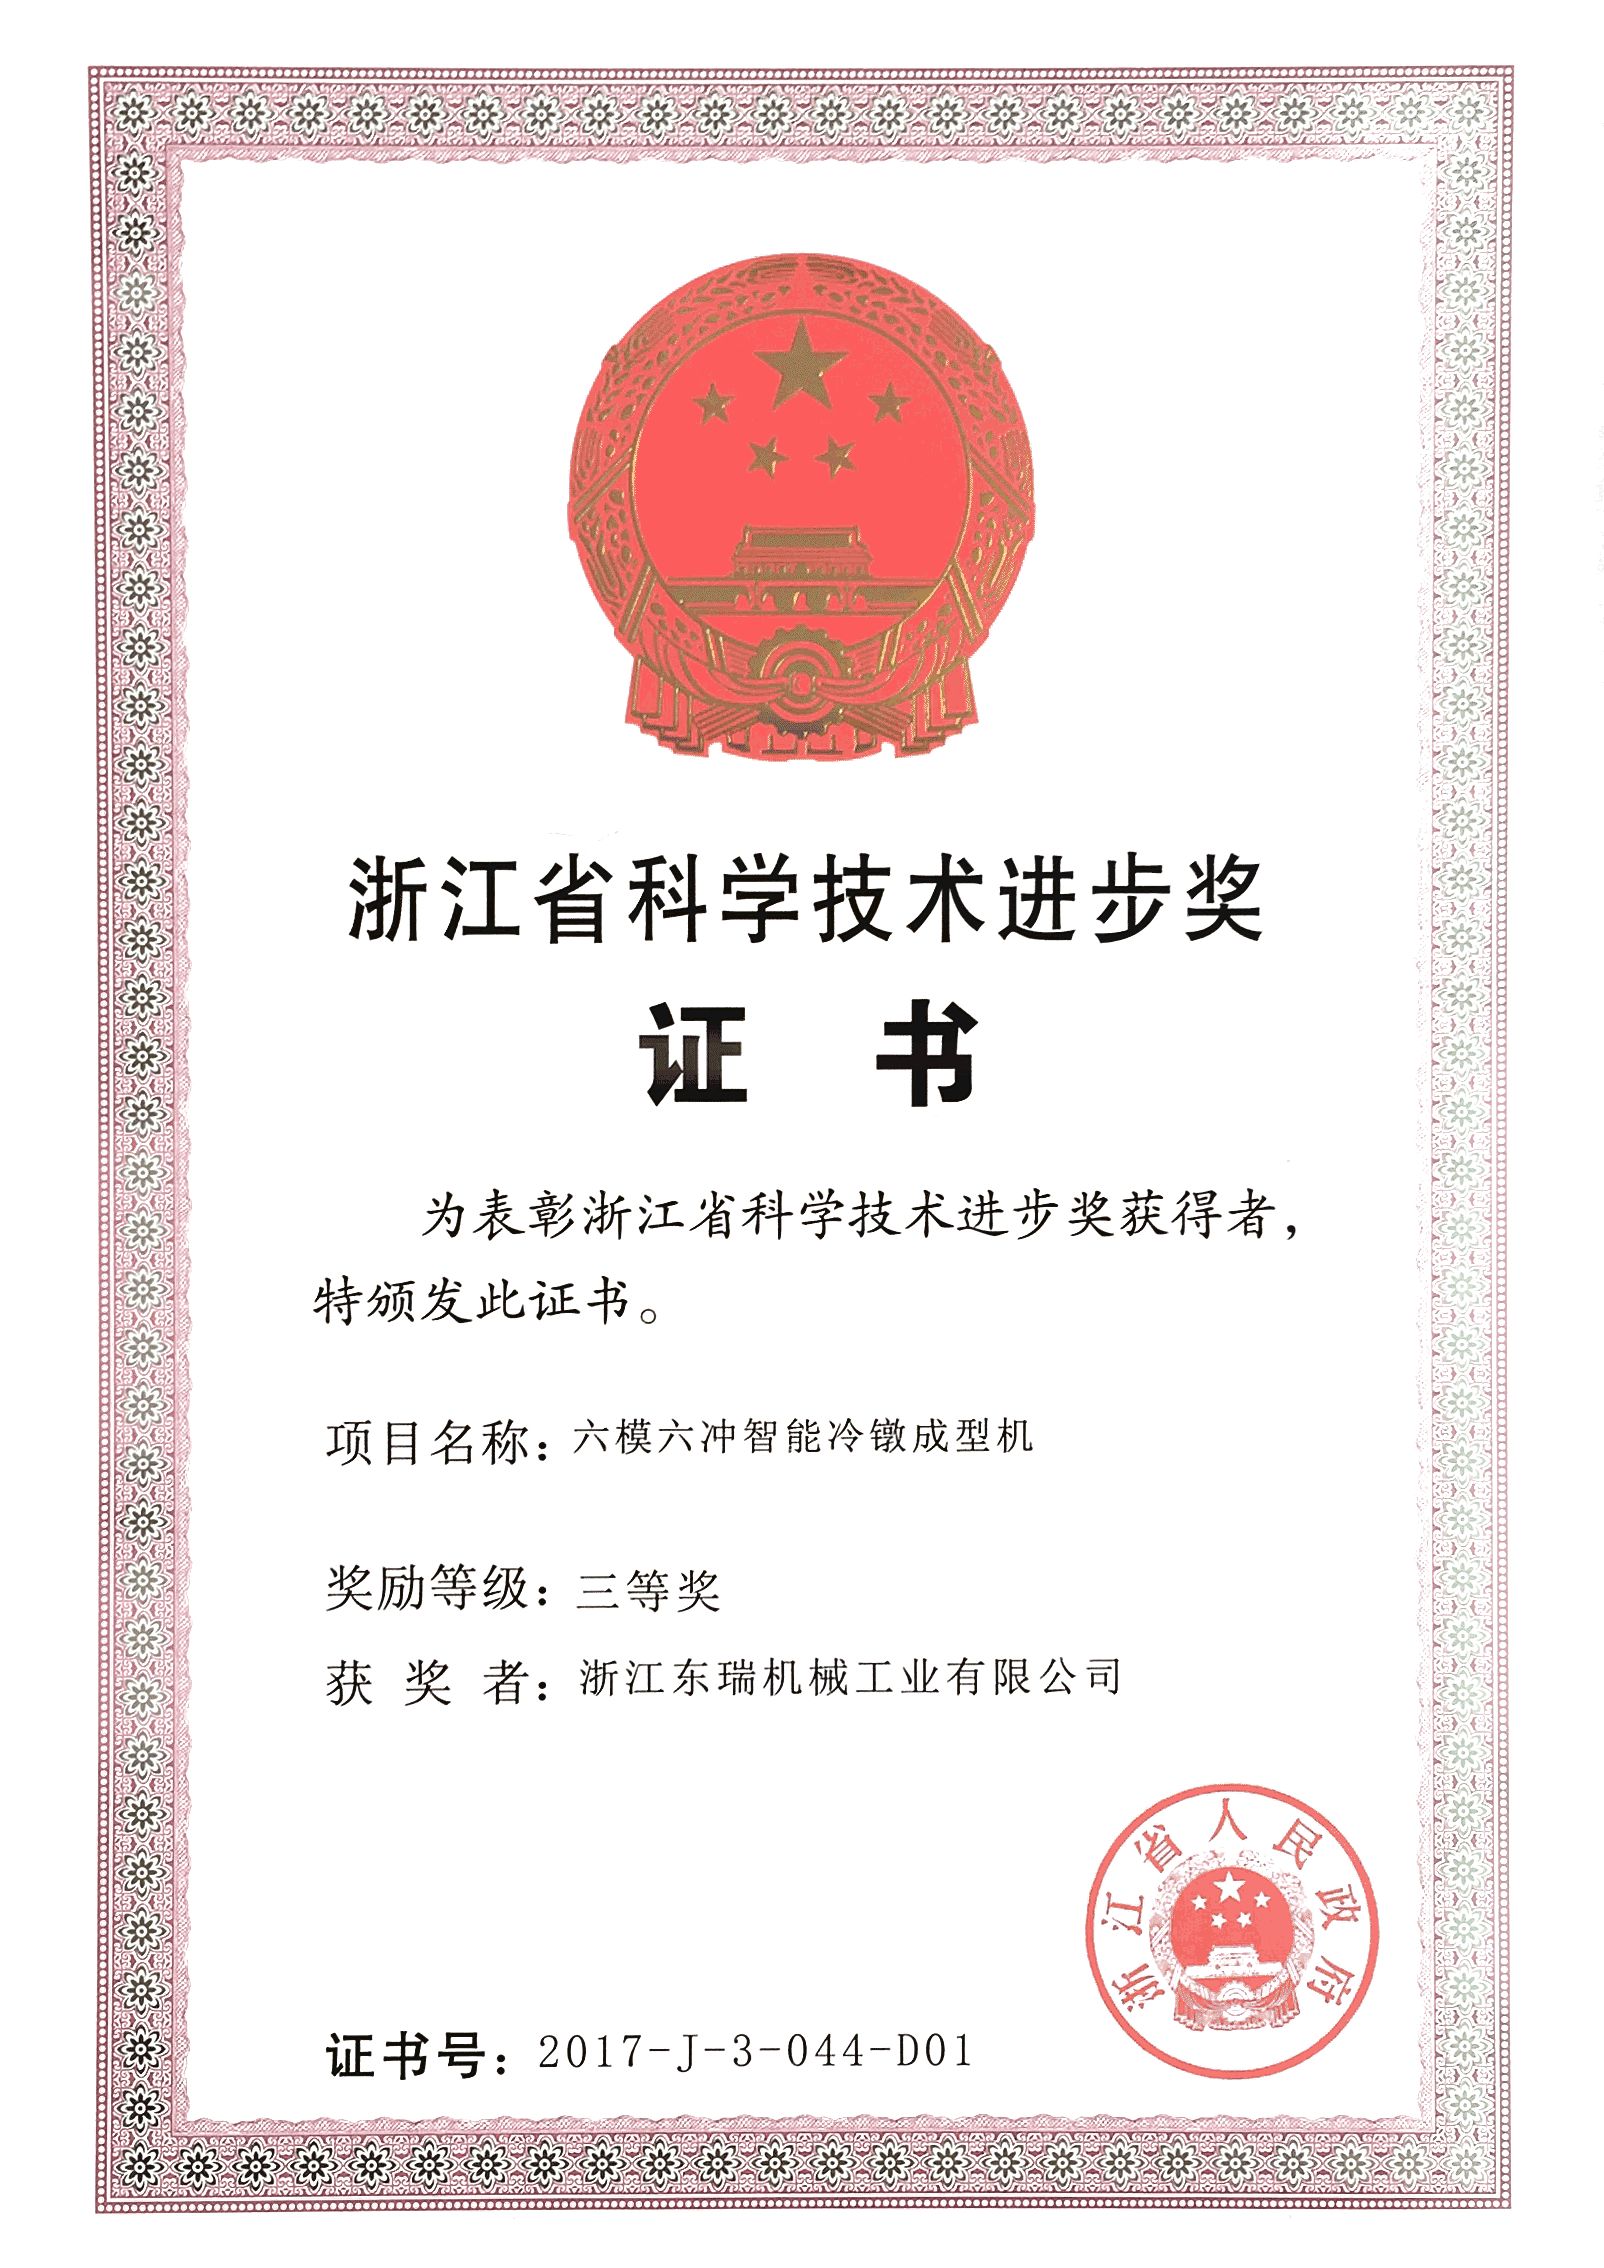 Third Prize of Zhejiang Science and Technology Progress Award